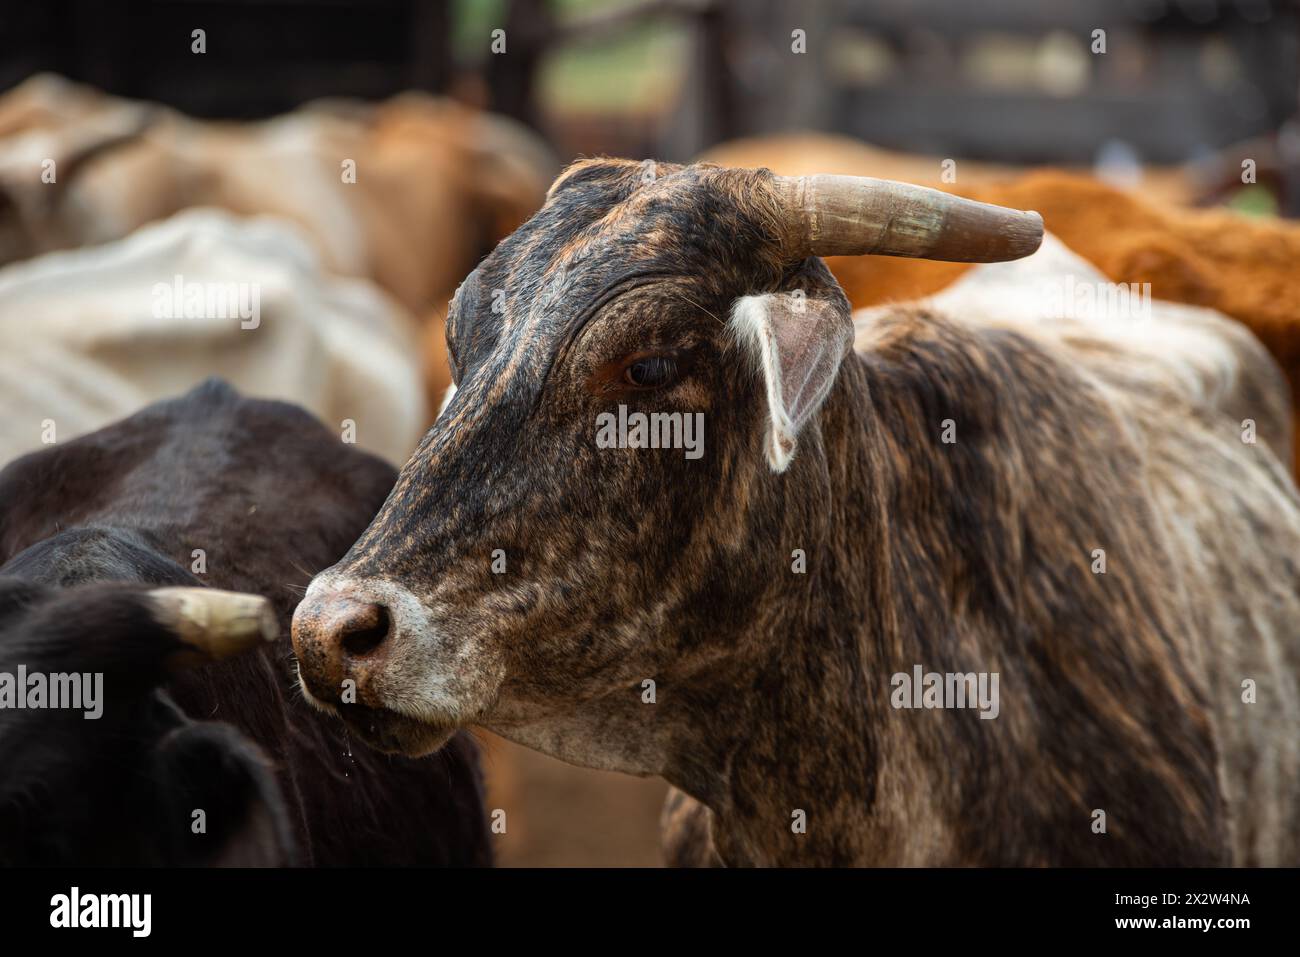 Mucche, bestiame in un ranch in Argentina. Foto Stock